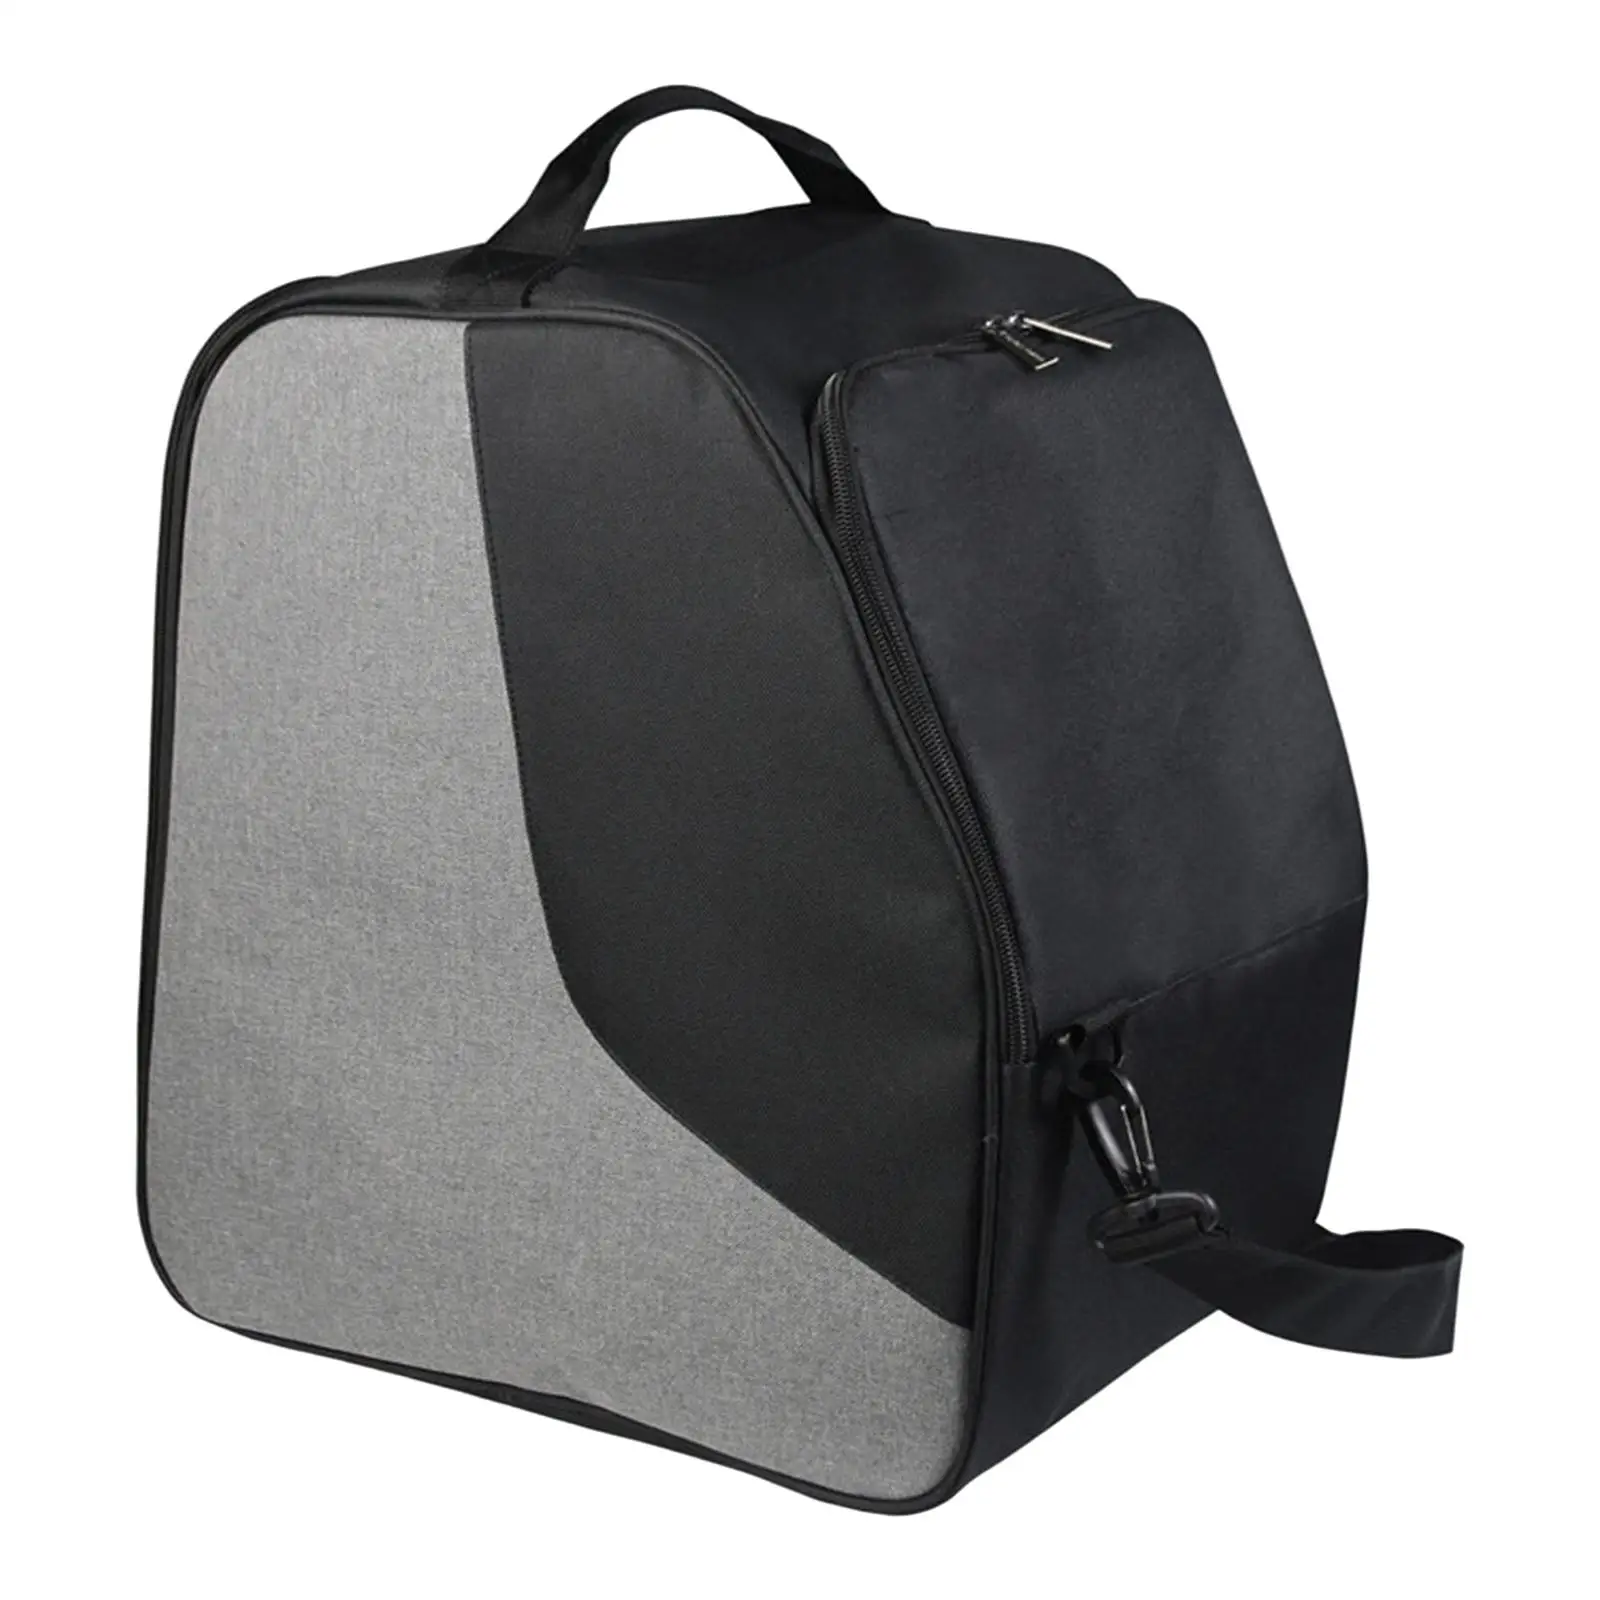 Portable Ski Boot Bag Large Capacity Carrying Bag Backpack for Women Air Travel Travel